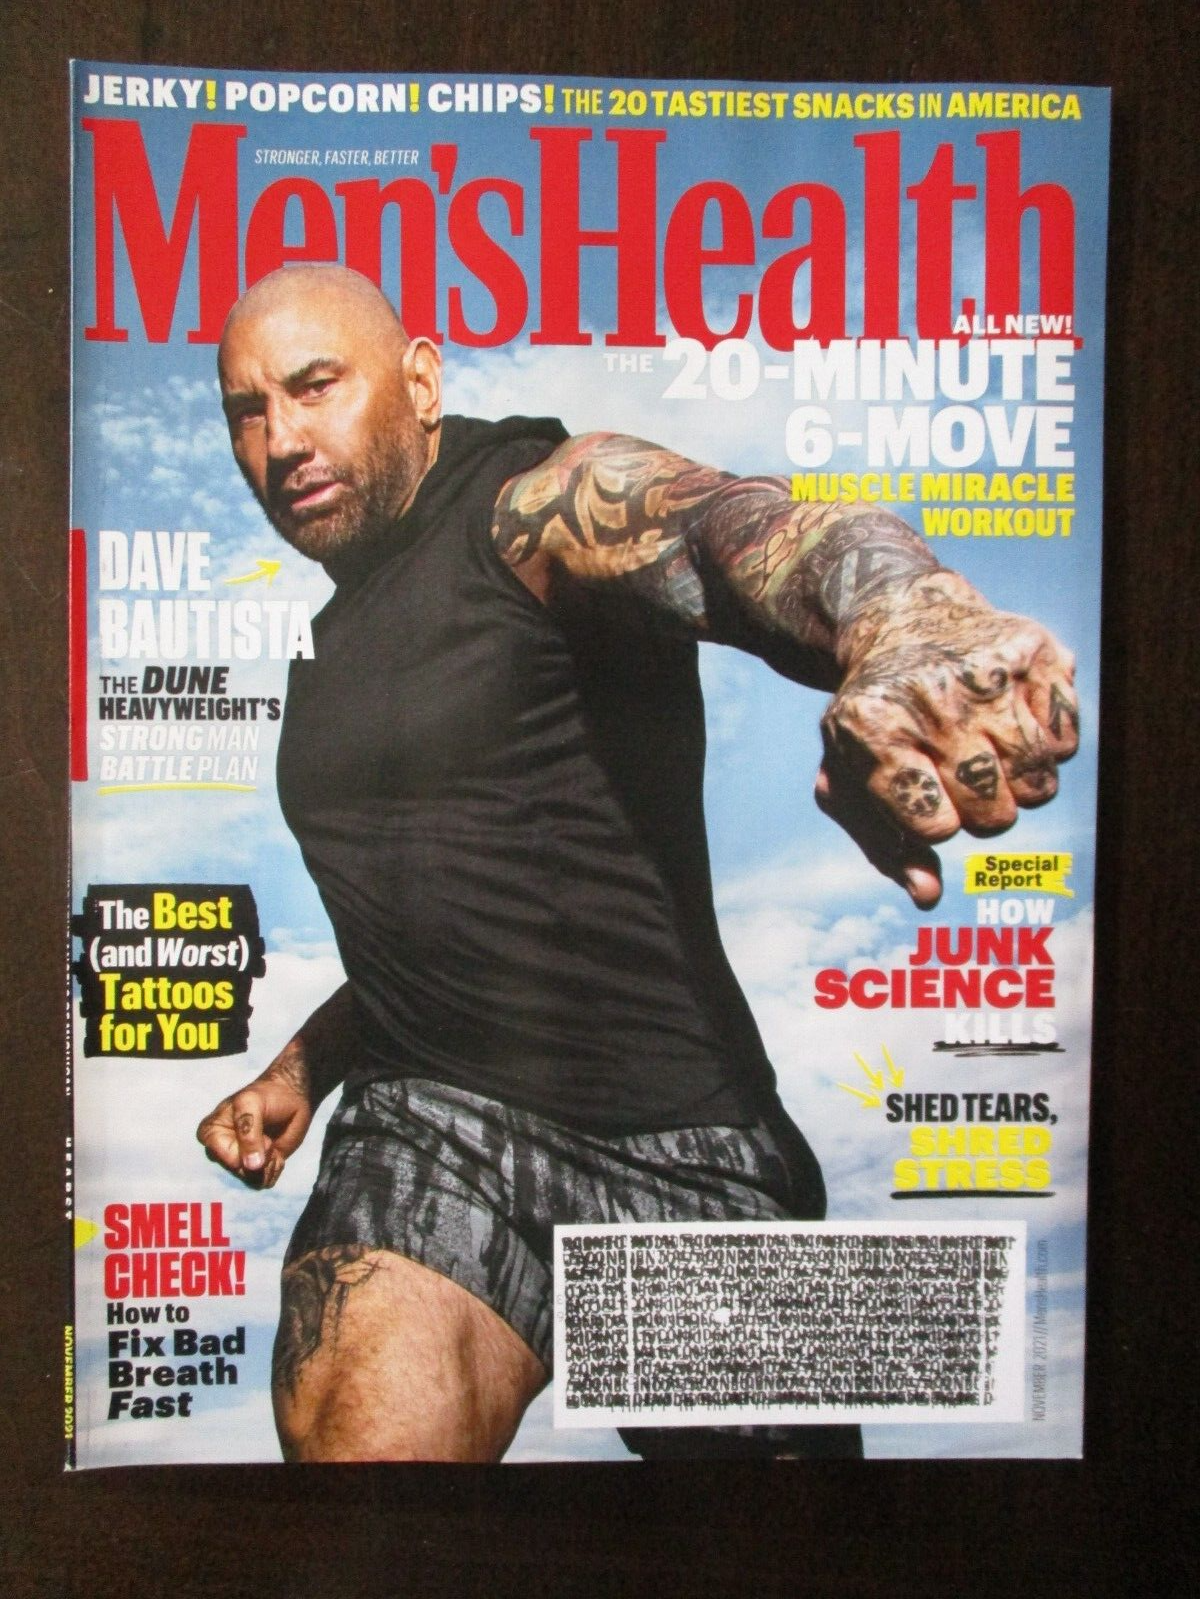 Dune Star Dave Bautista Covers Men's Health November Issue - Tom + Lorenzo